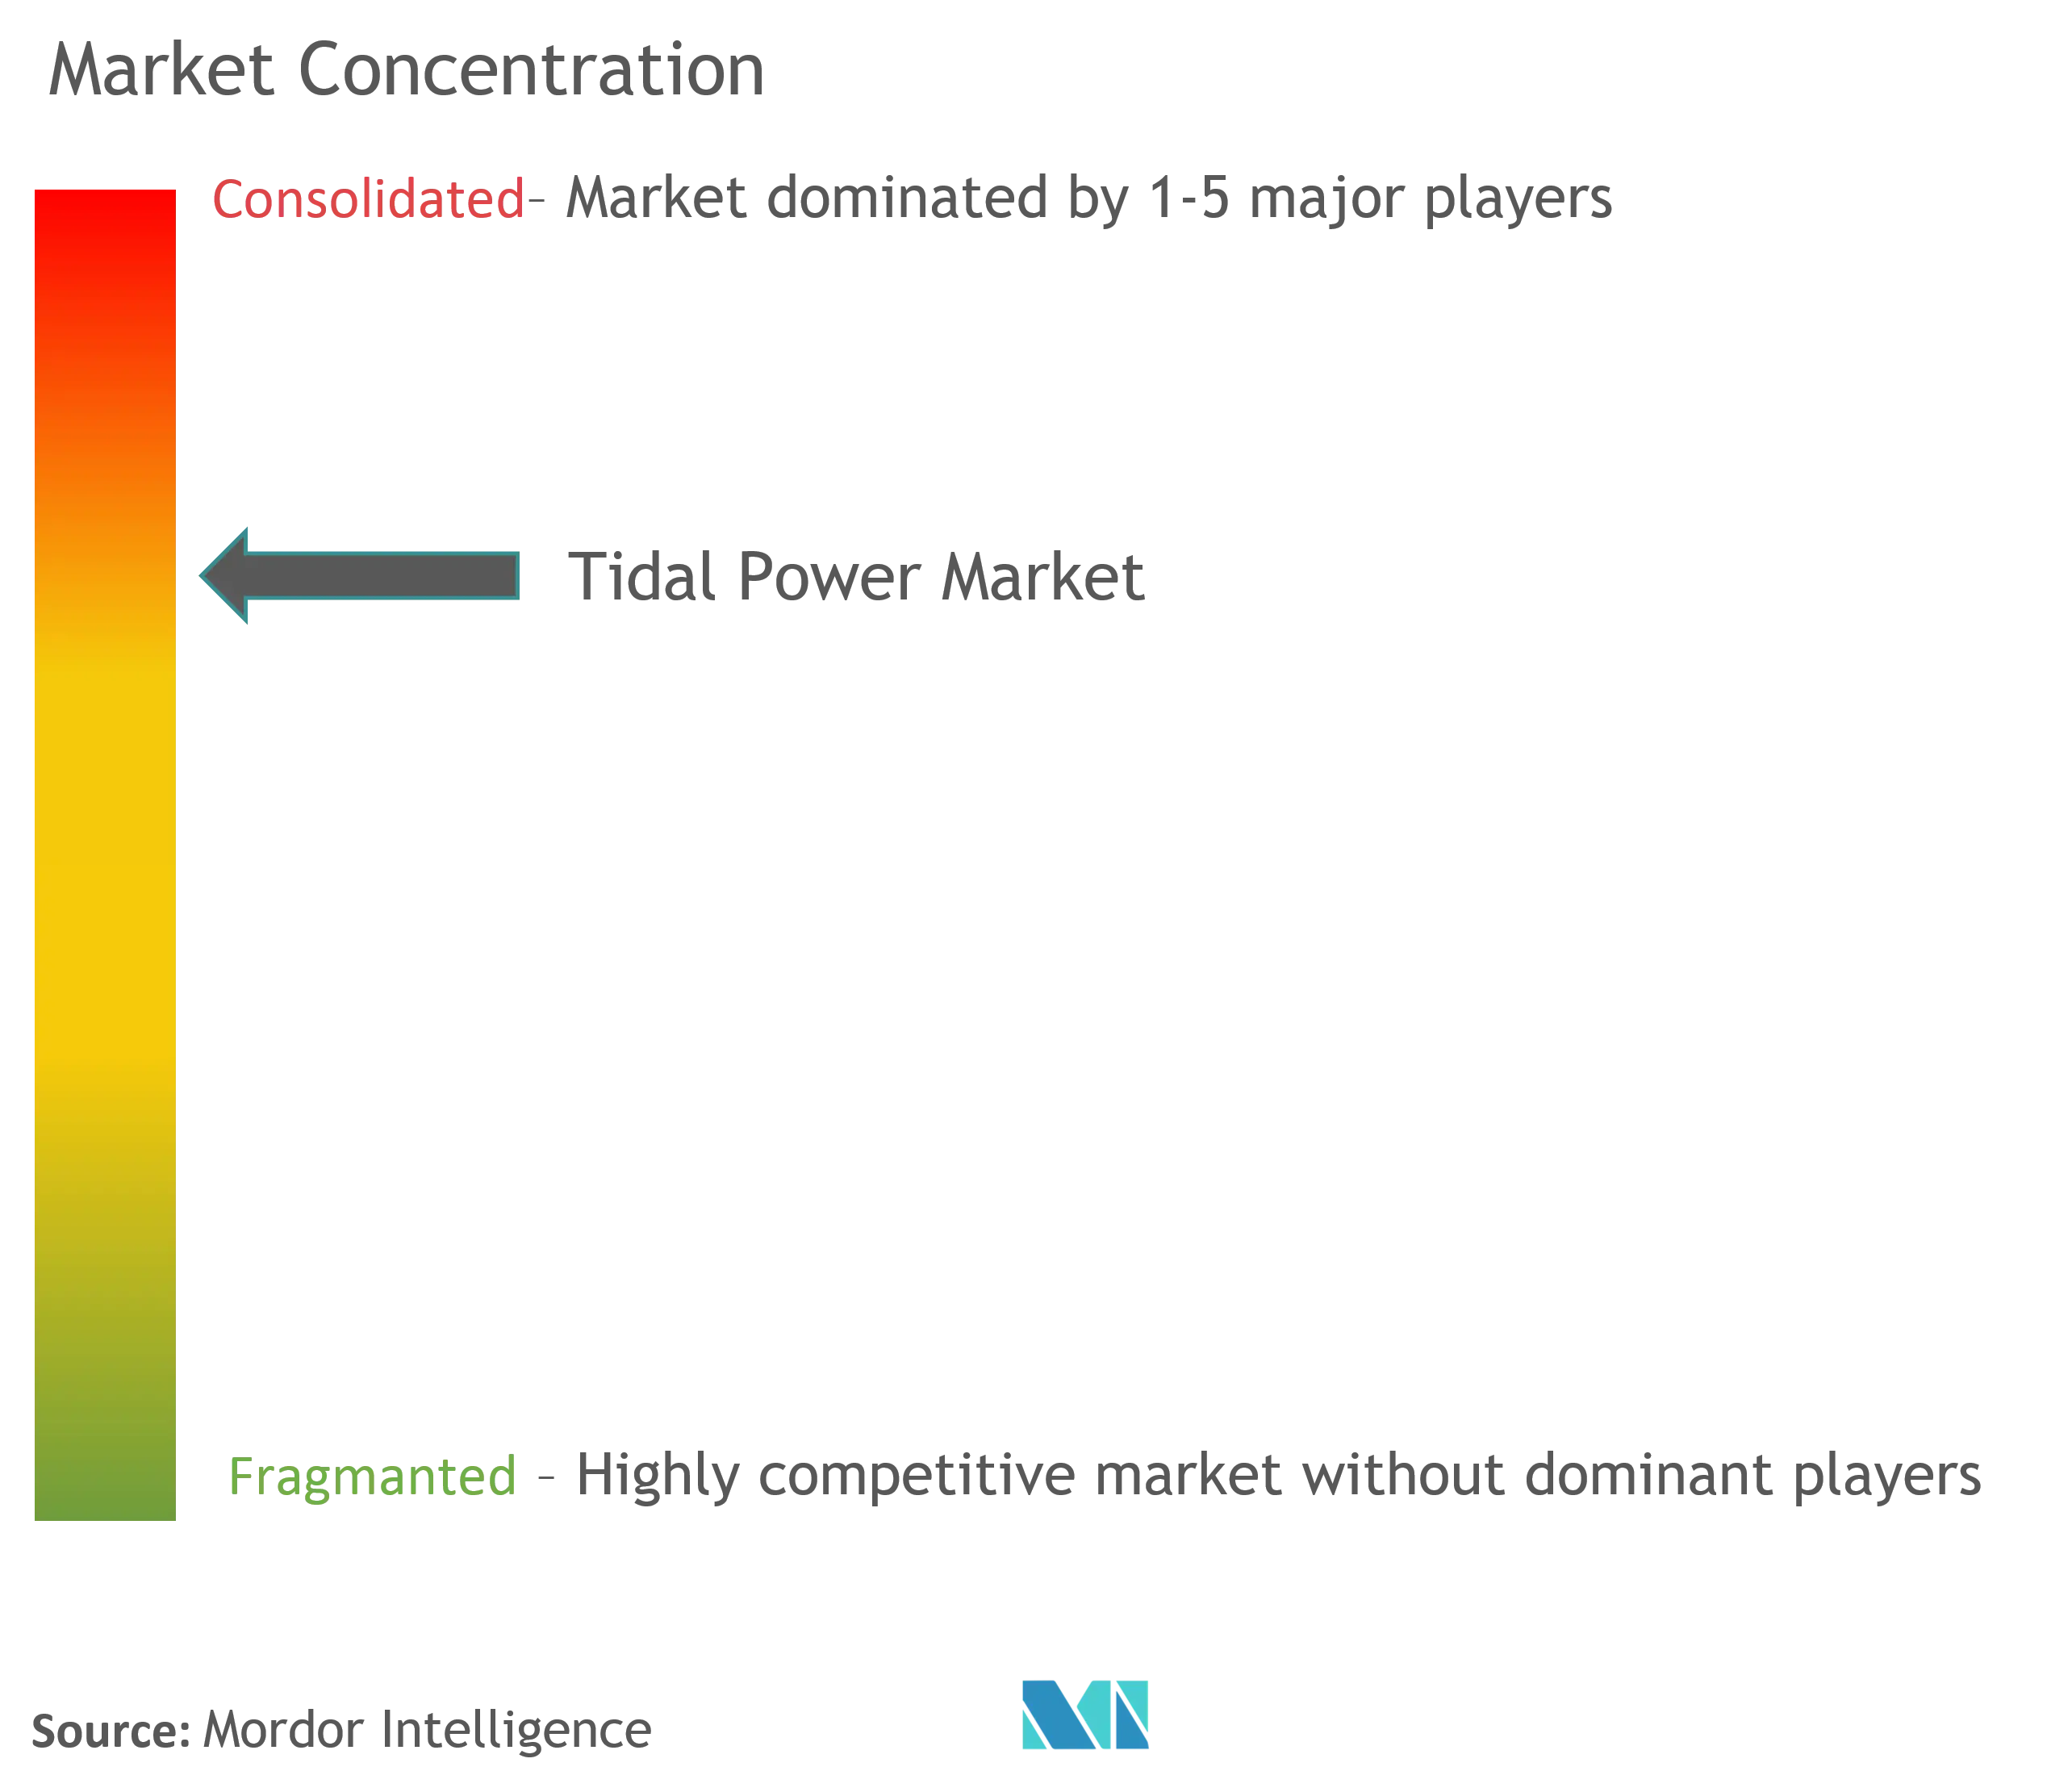 Tidal Power Market Concentration